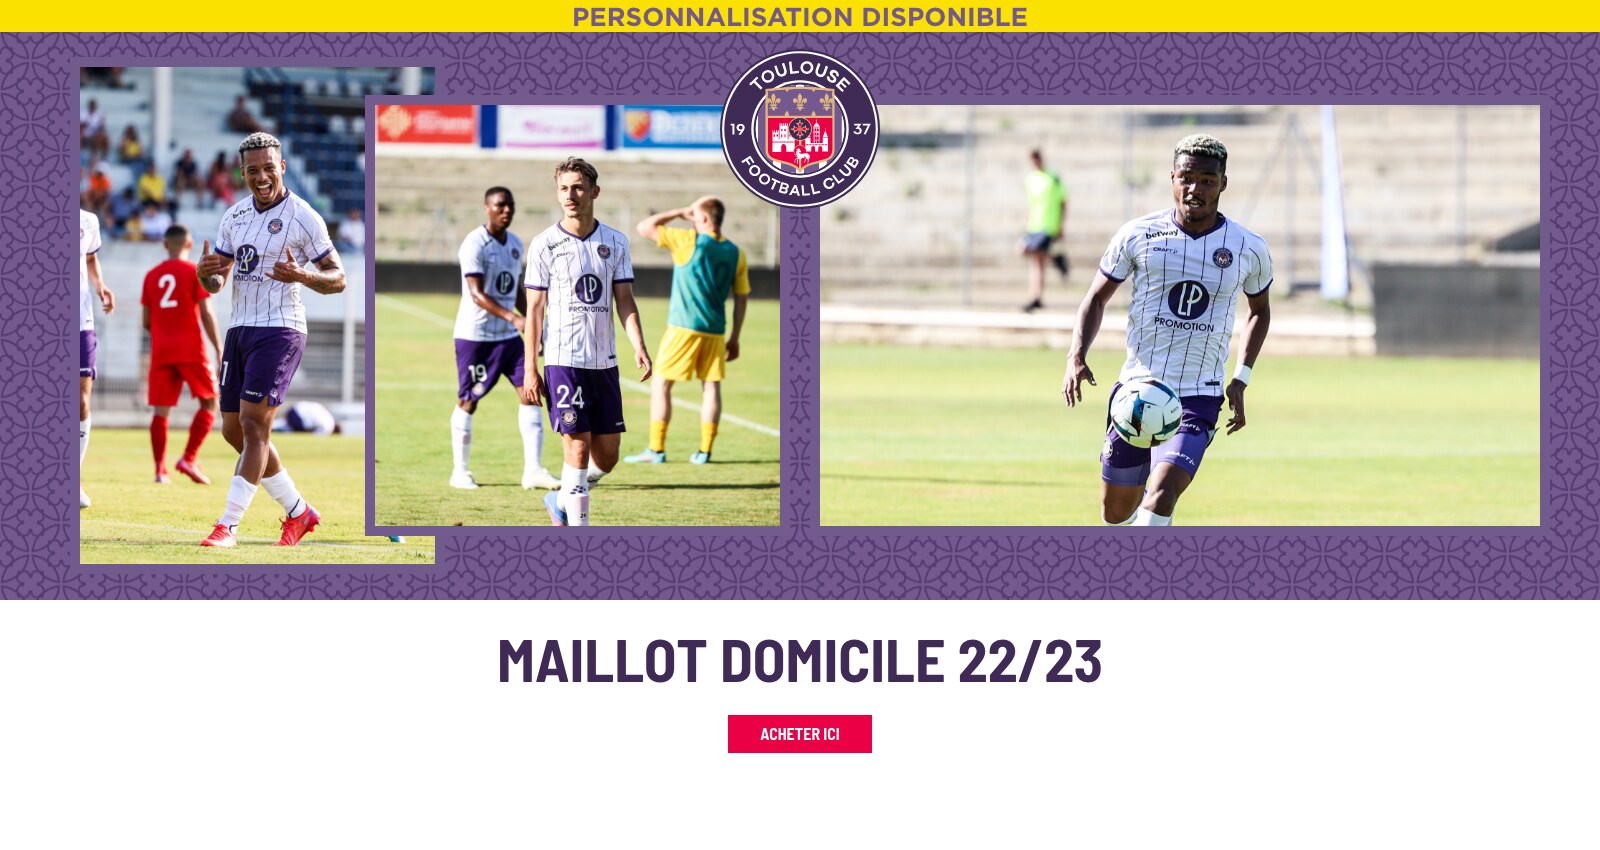 Maillot Domicile 22/23 – Acheter Ici